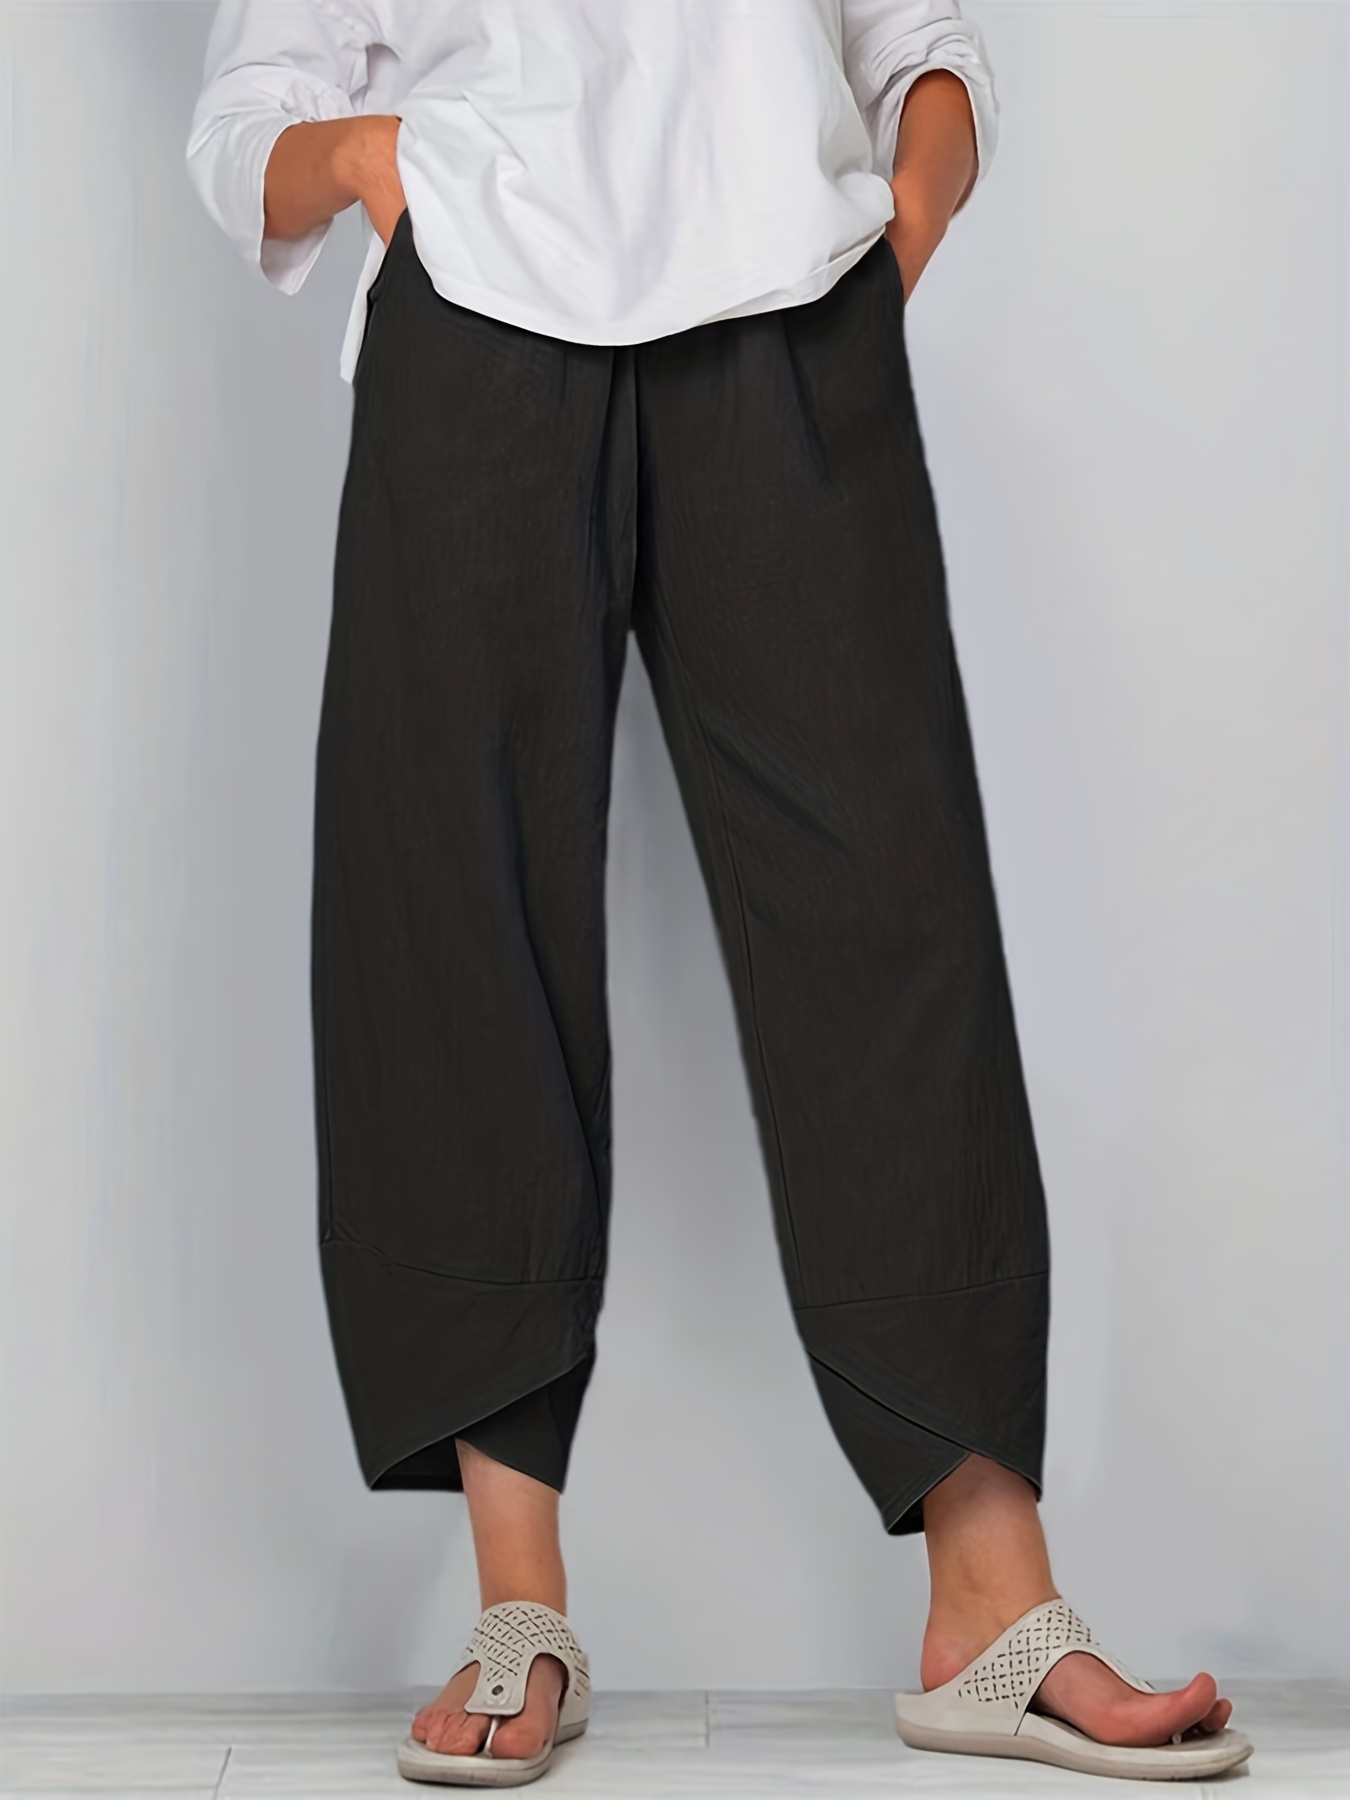 Mrat Full Length Pants Women's Slim Fit Pants Ladies Fashion Casual Solid  Color Elastic Cotton And Linen Trousers Pants Work Pants Female